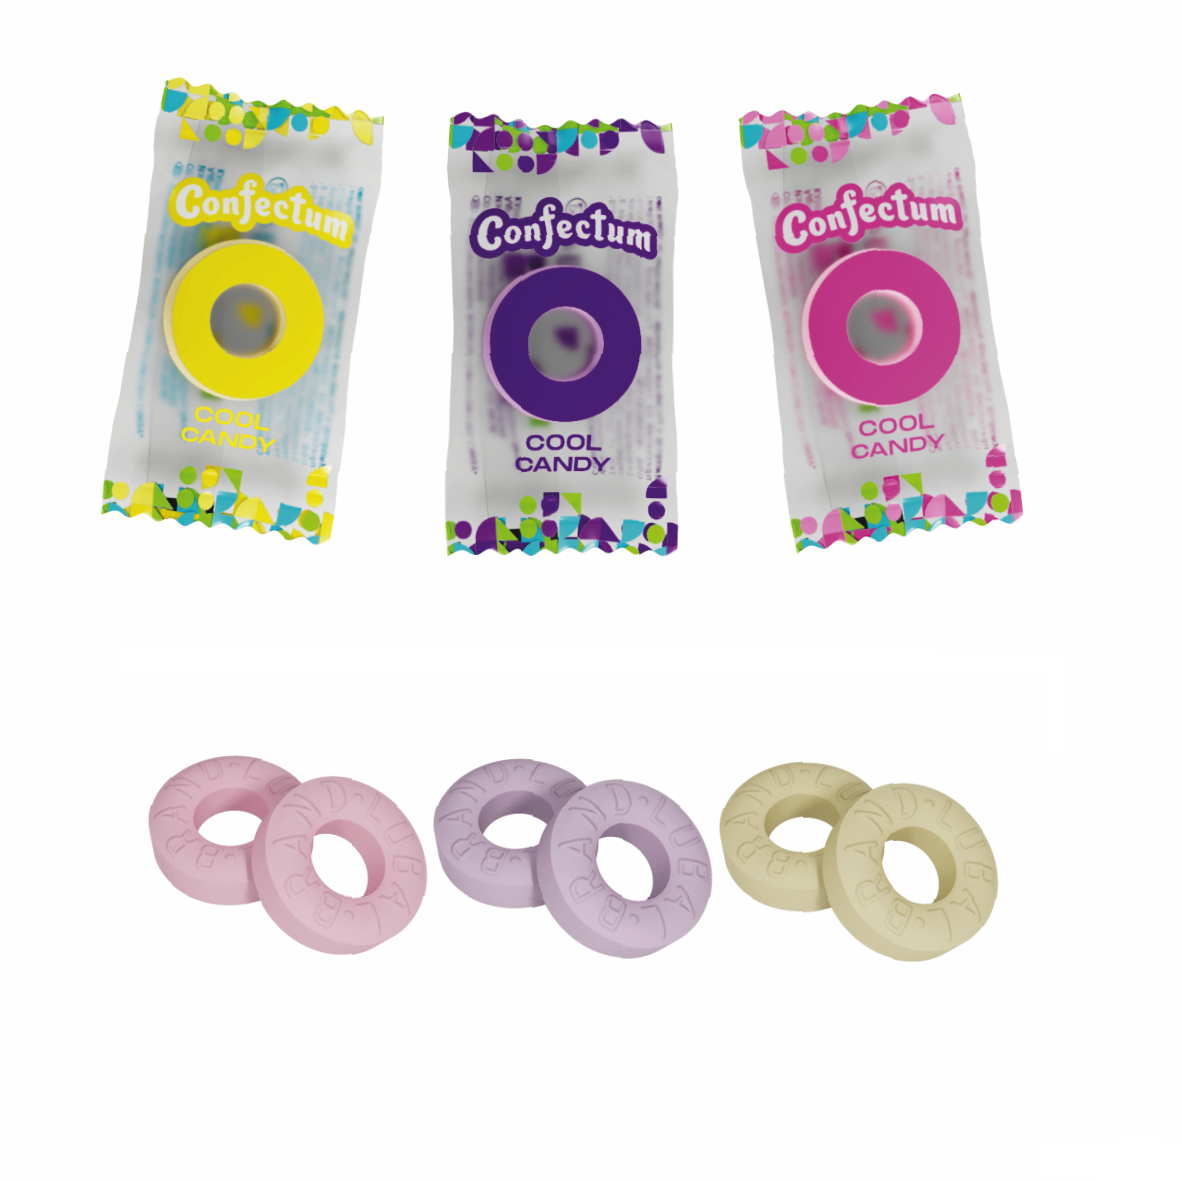 Конфеты "Confectum Cool Candy" 500г/Конфектум